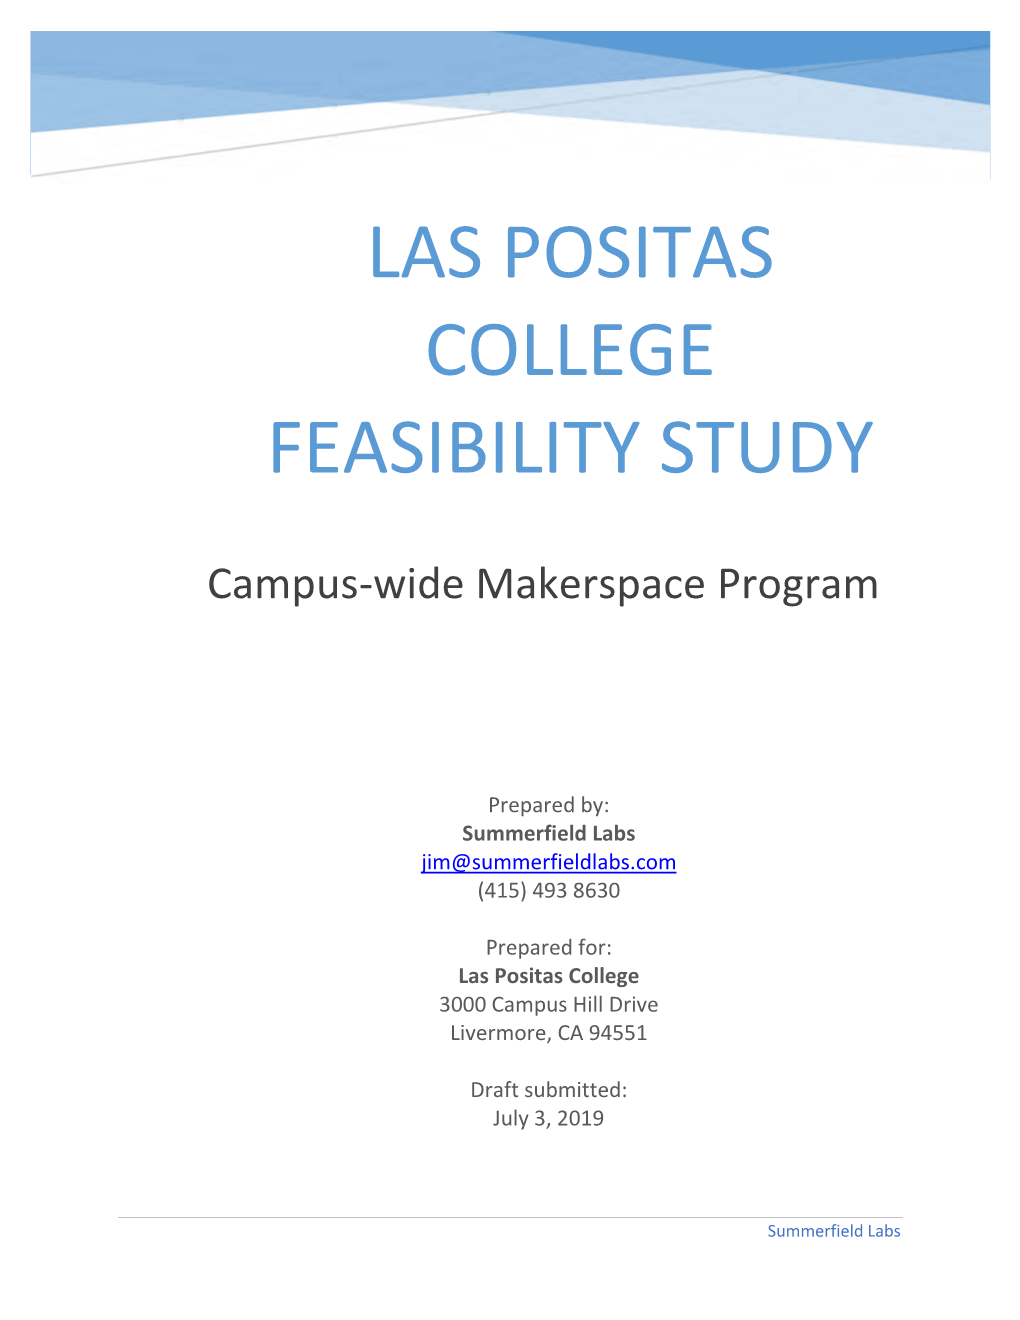 Las Positas College Feasibility Study